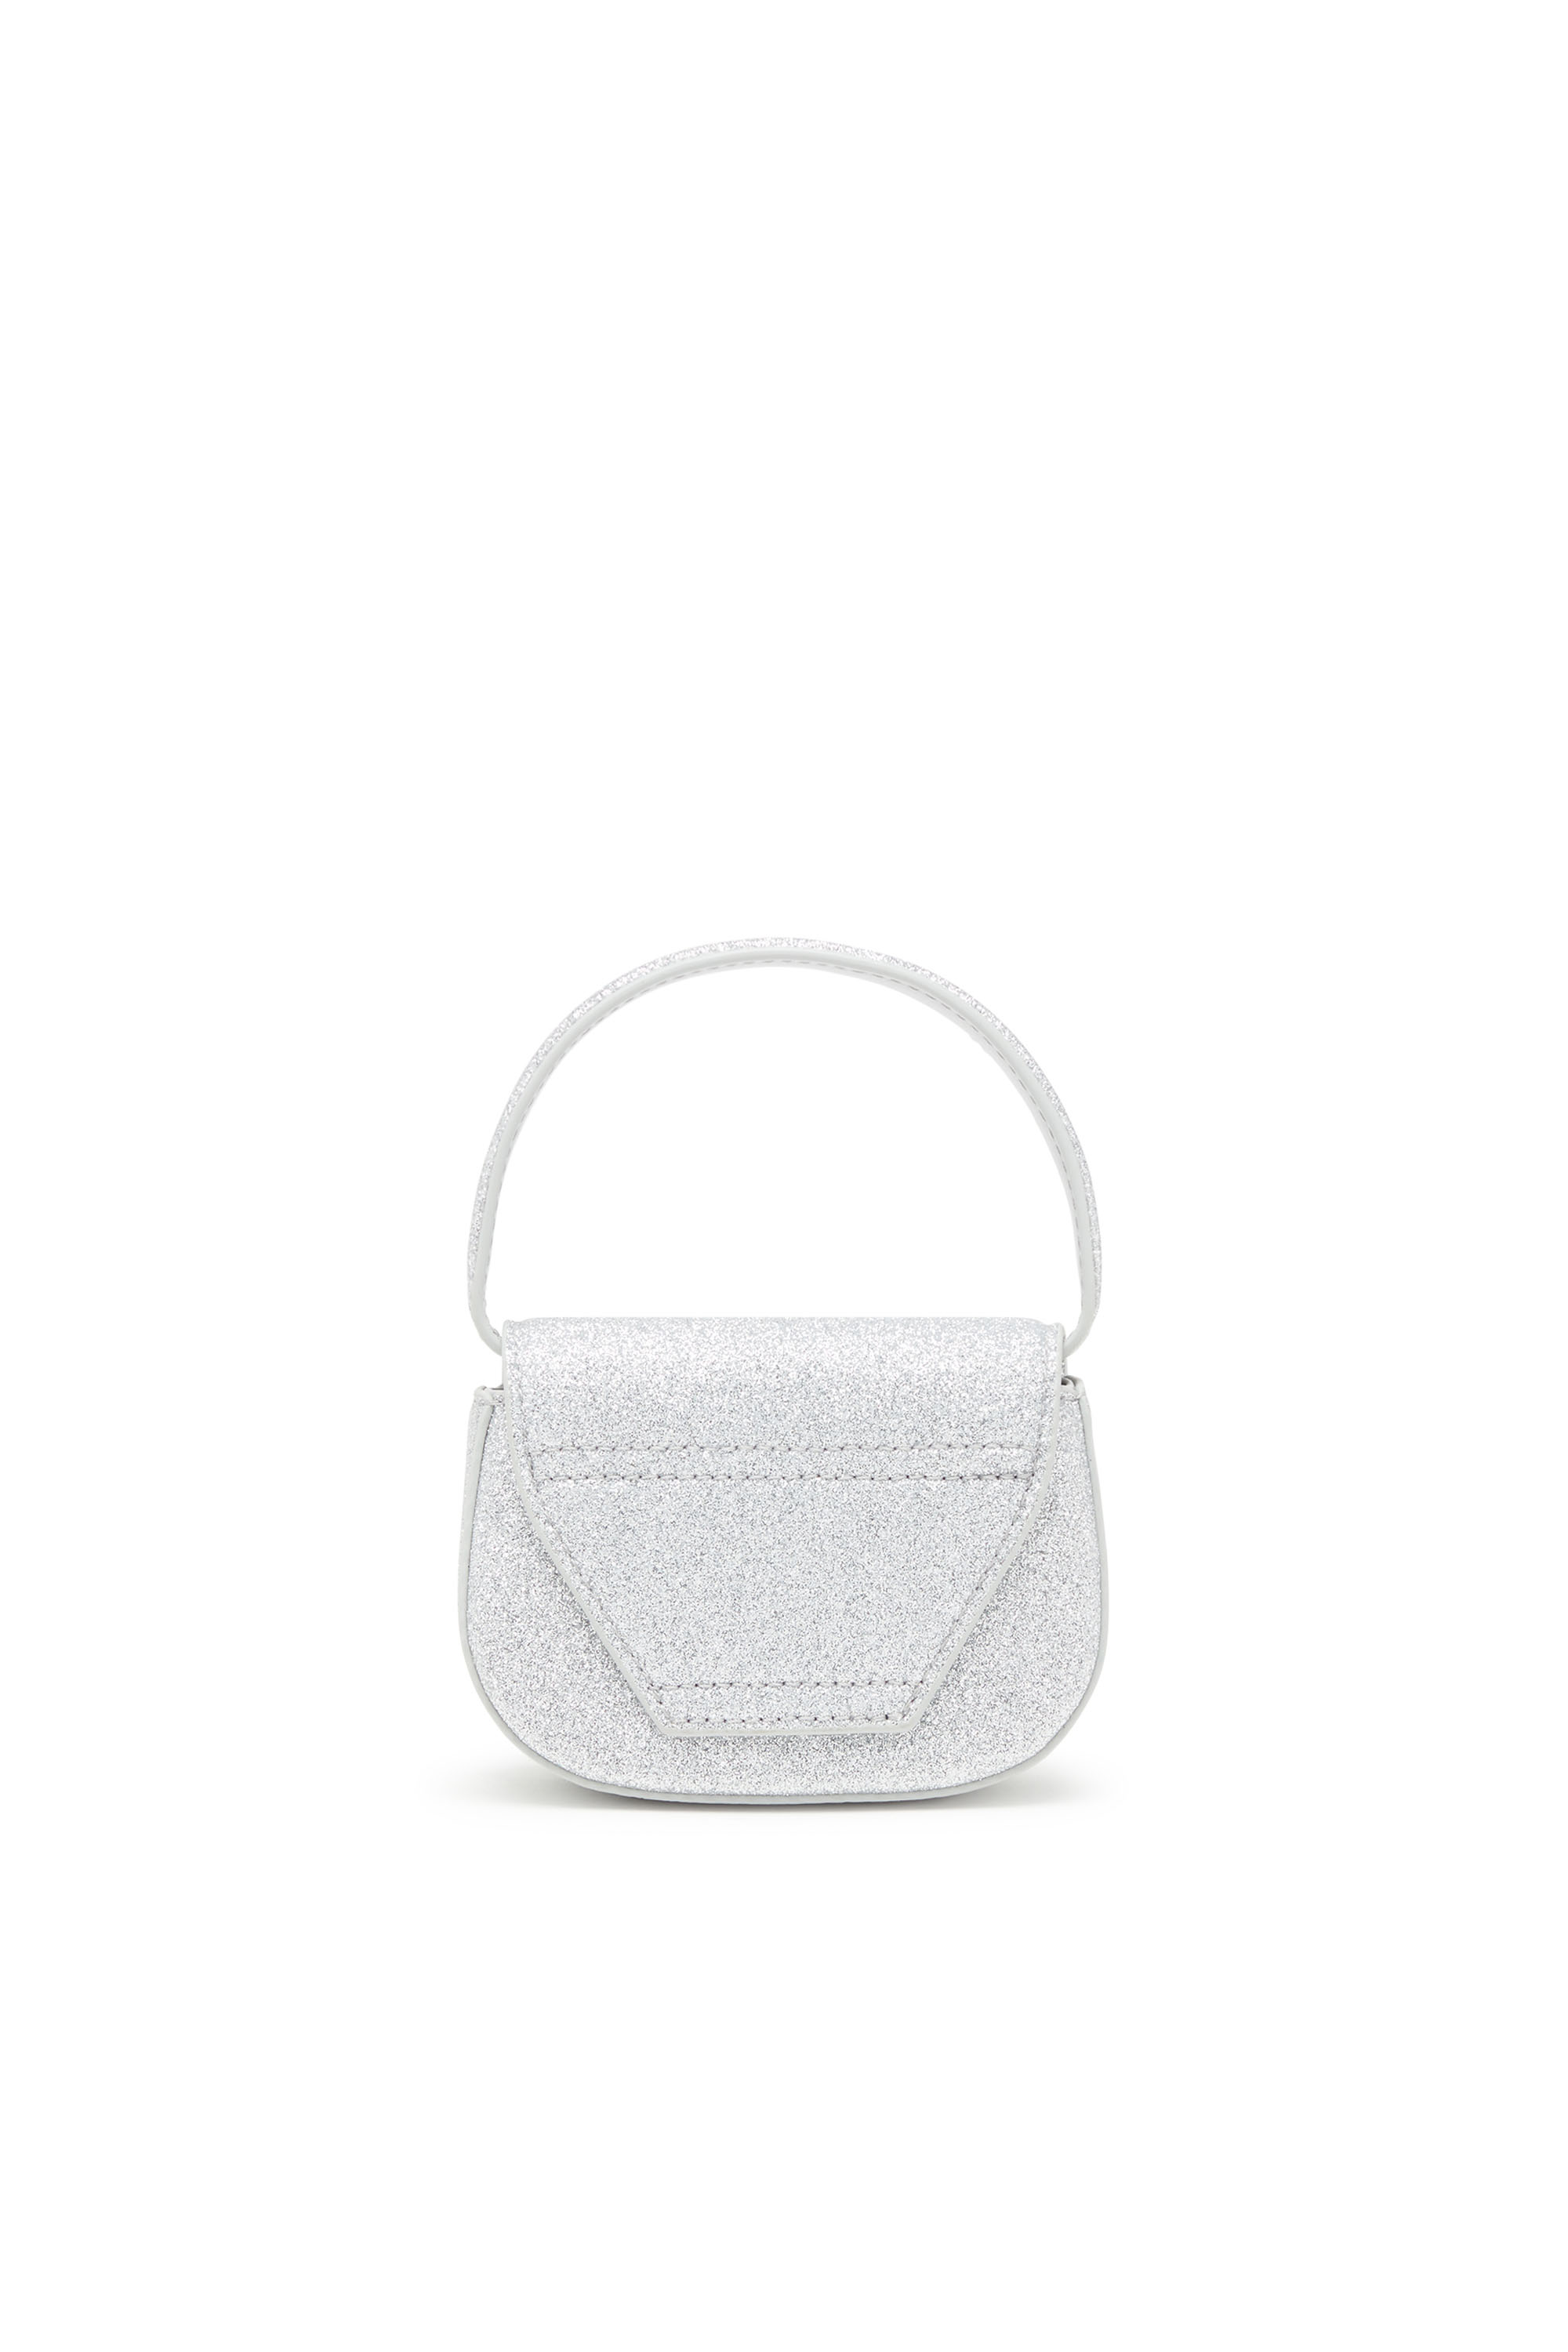 Women's 1DR XS Cross Bodybag - Iconic mini bag in glitter fabric